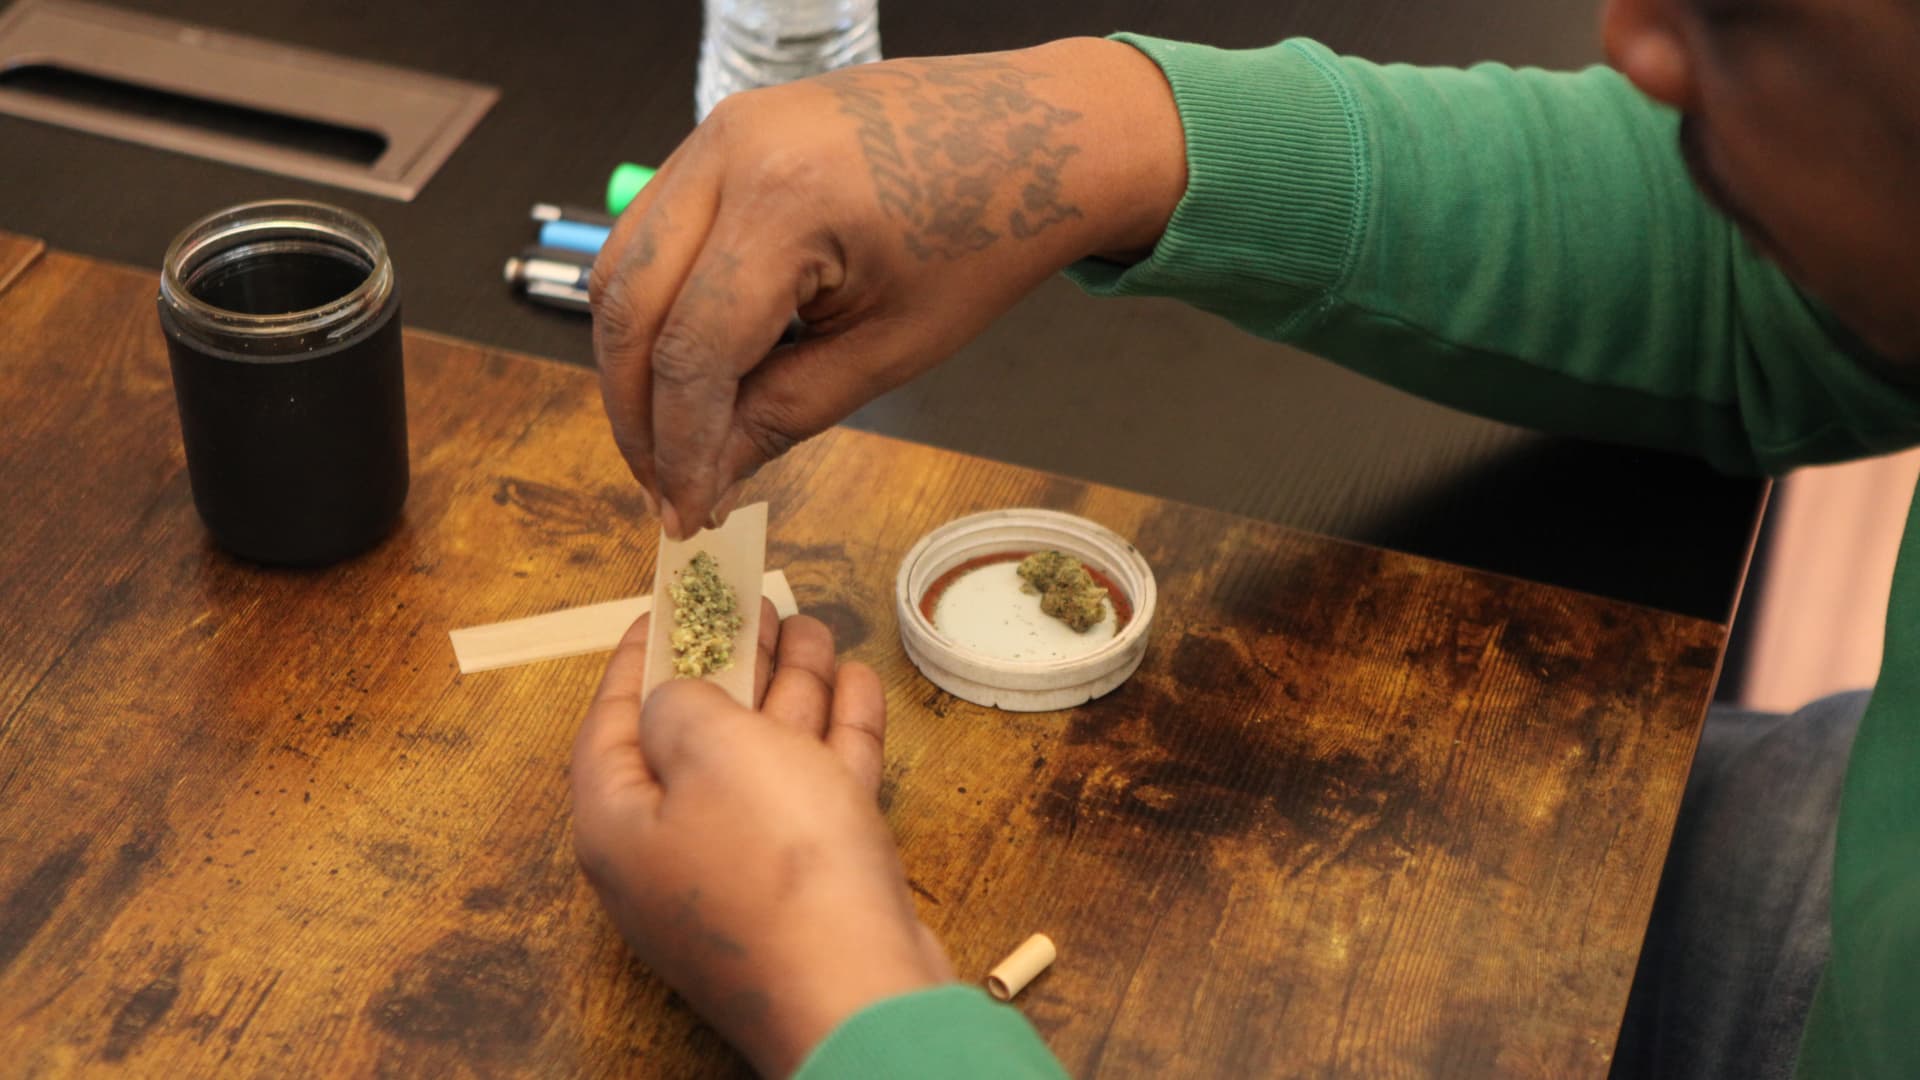 John Dockery rolls a joint. He's sold marijuana since he was a teenager in the 1990s. 